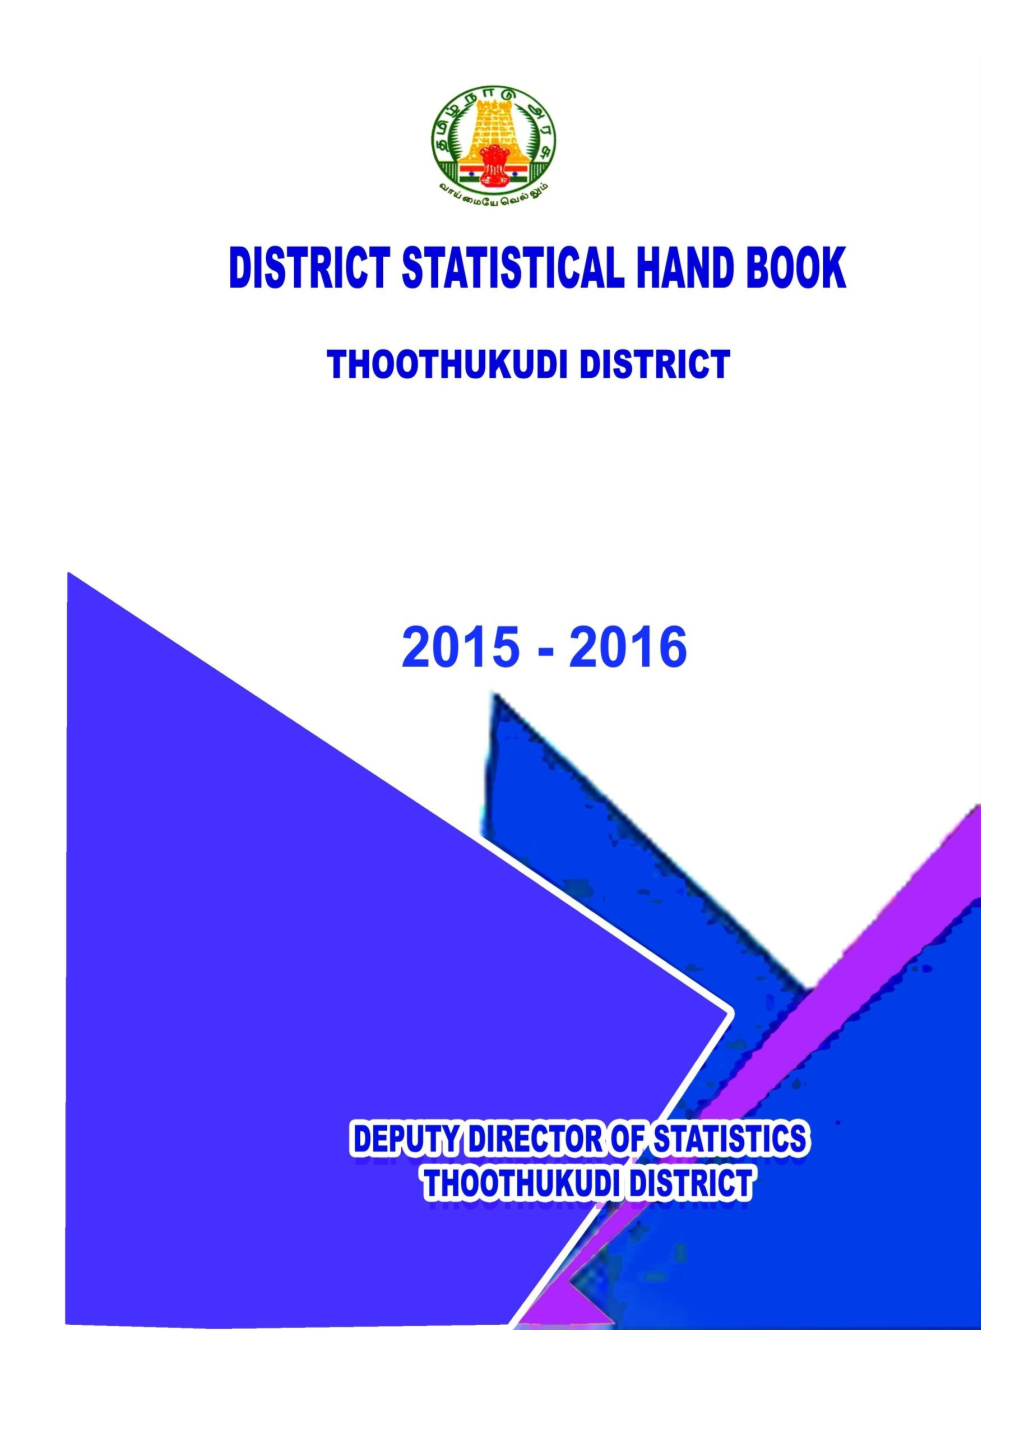 District Statistical Hand Book 2015-2016 Thoothukudi